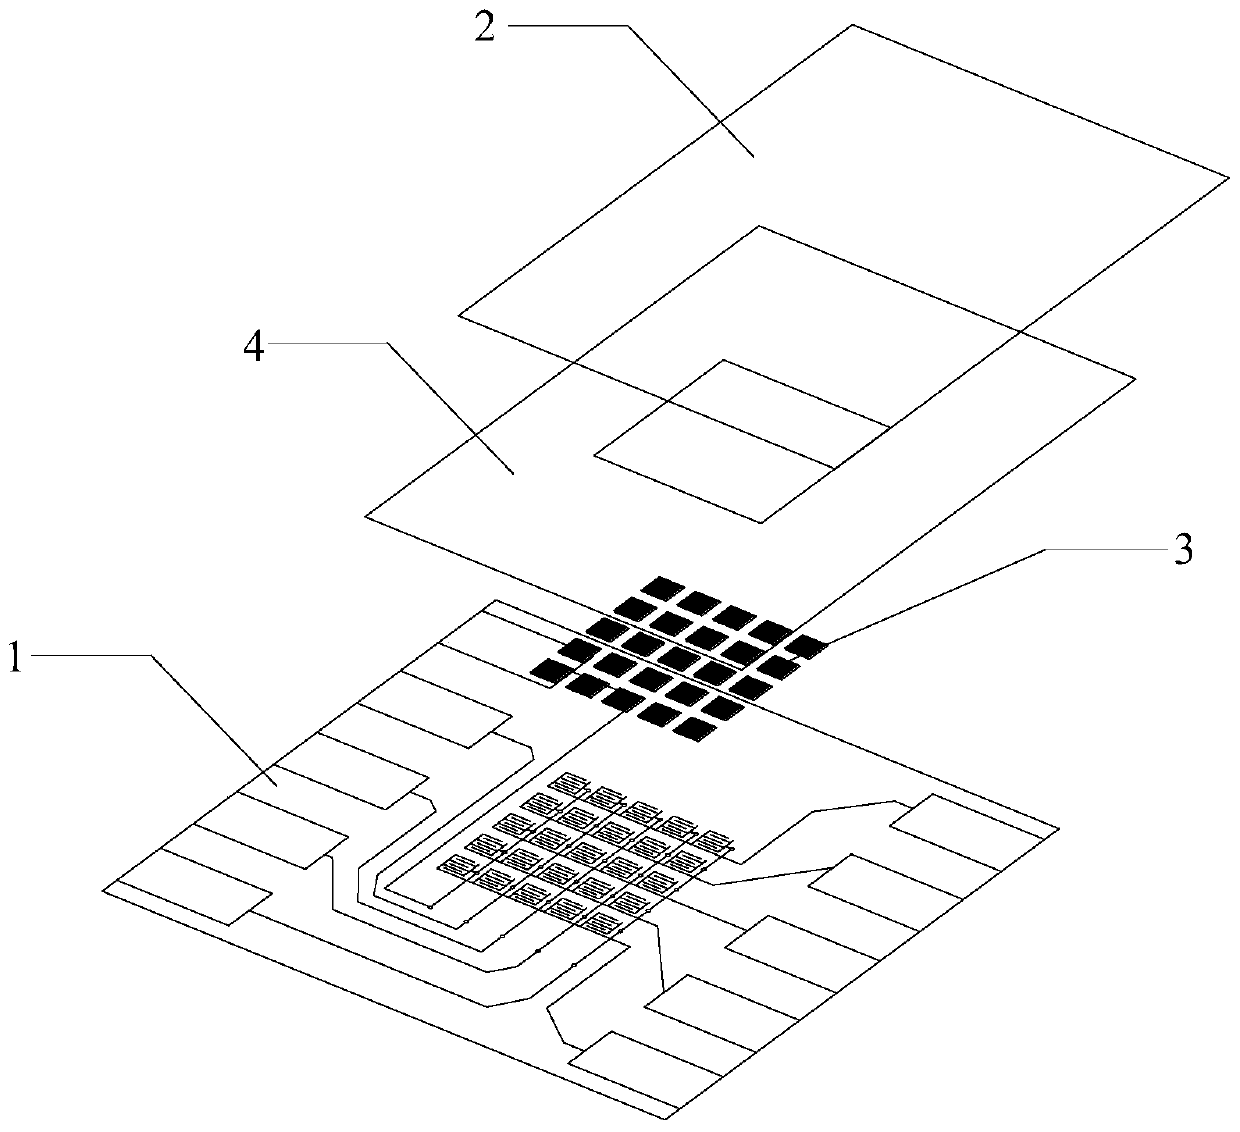 Interdigital large-area flexible array sensor and preparation method thereof